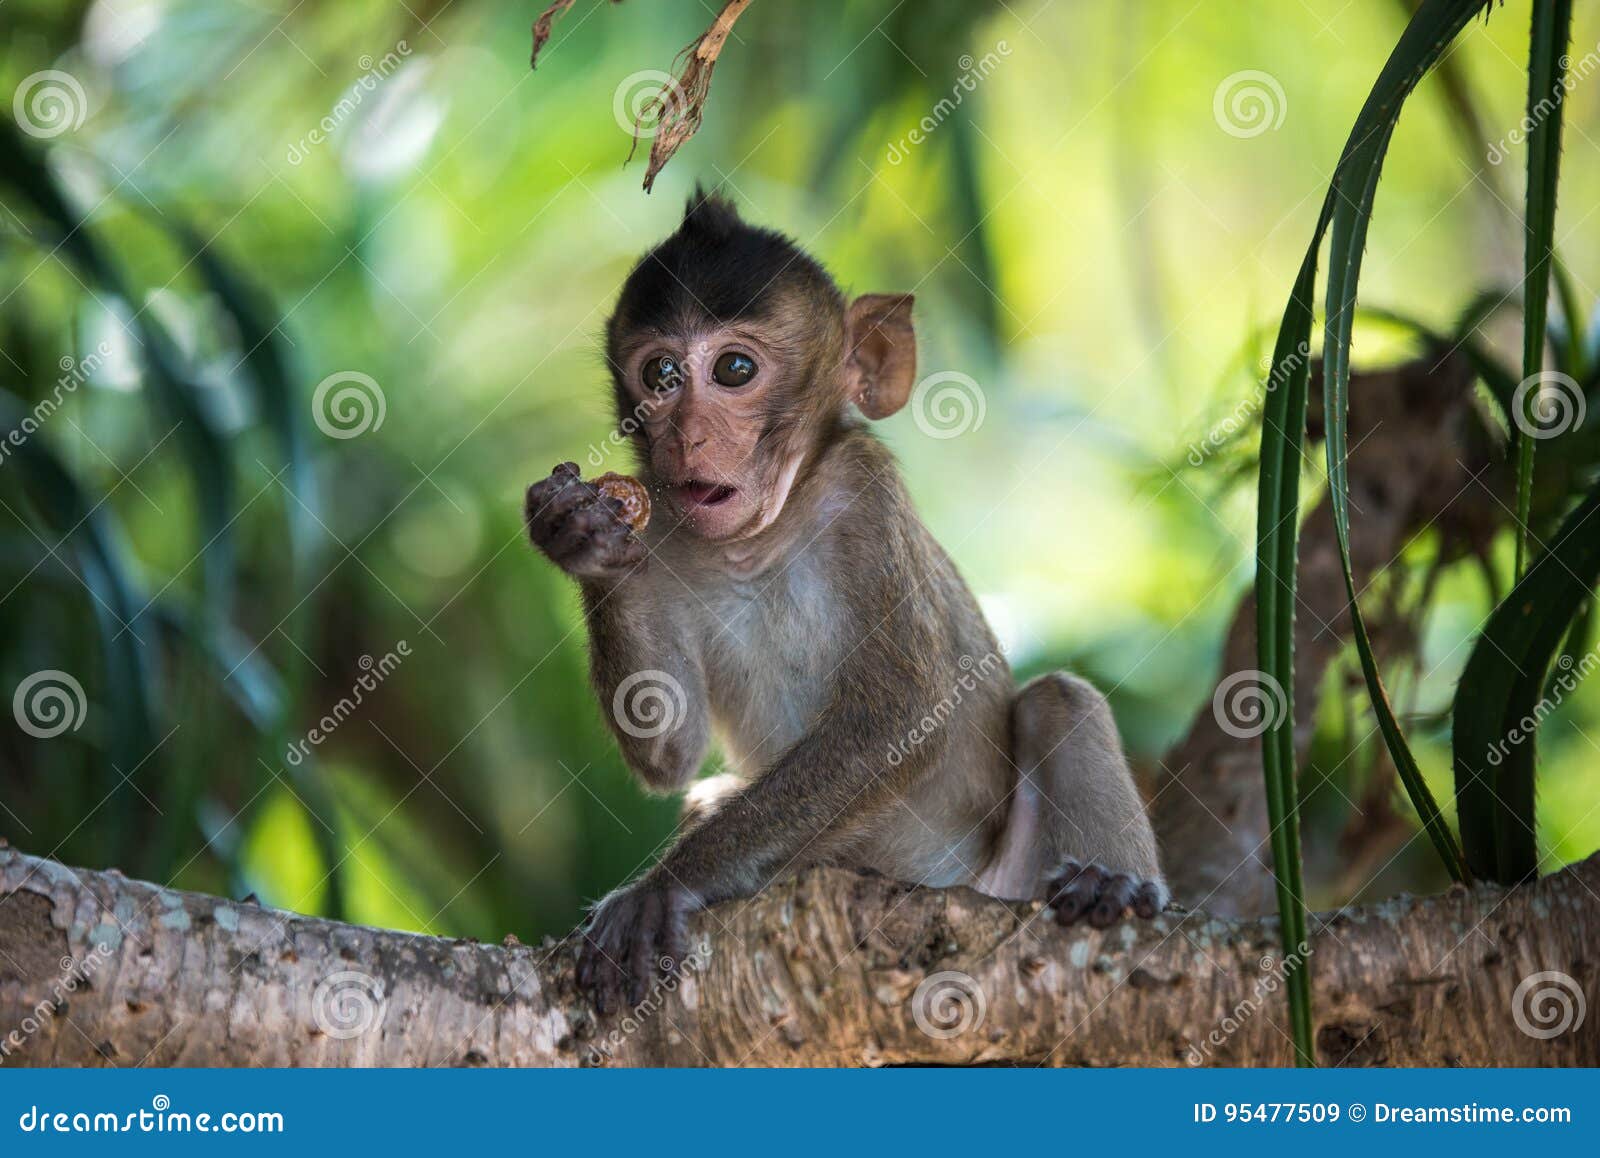 Funny monkey baby on tree stock image. Image of baby - 95477509